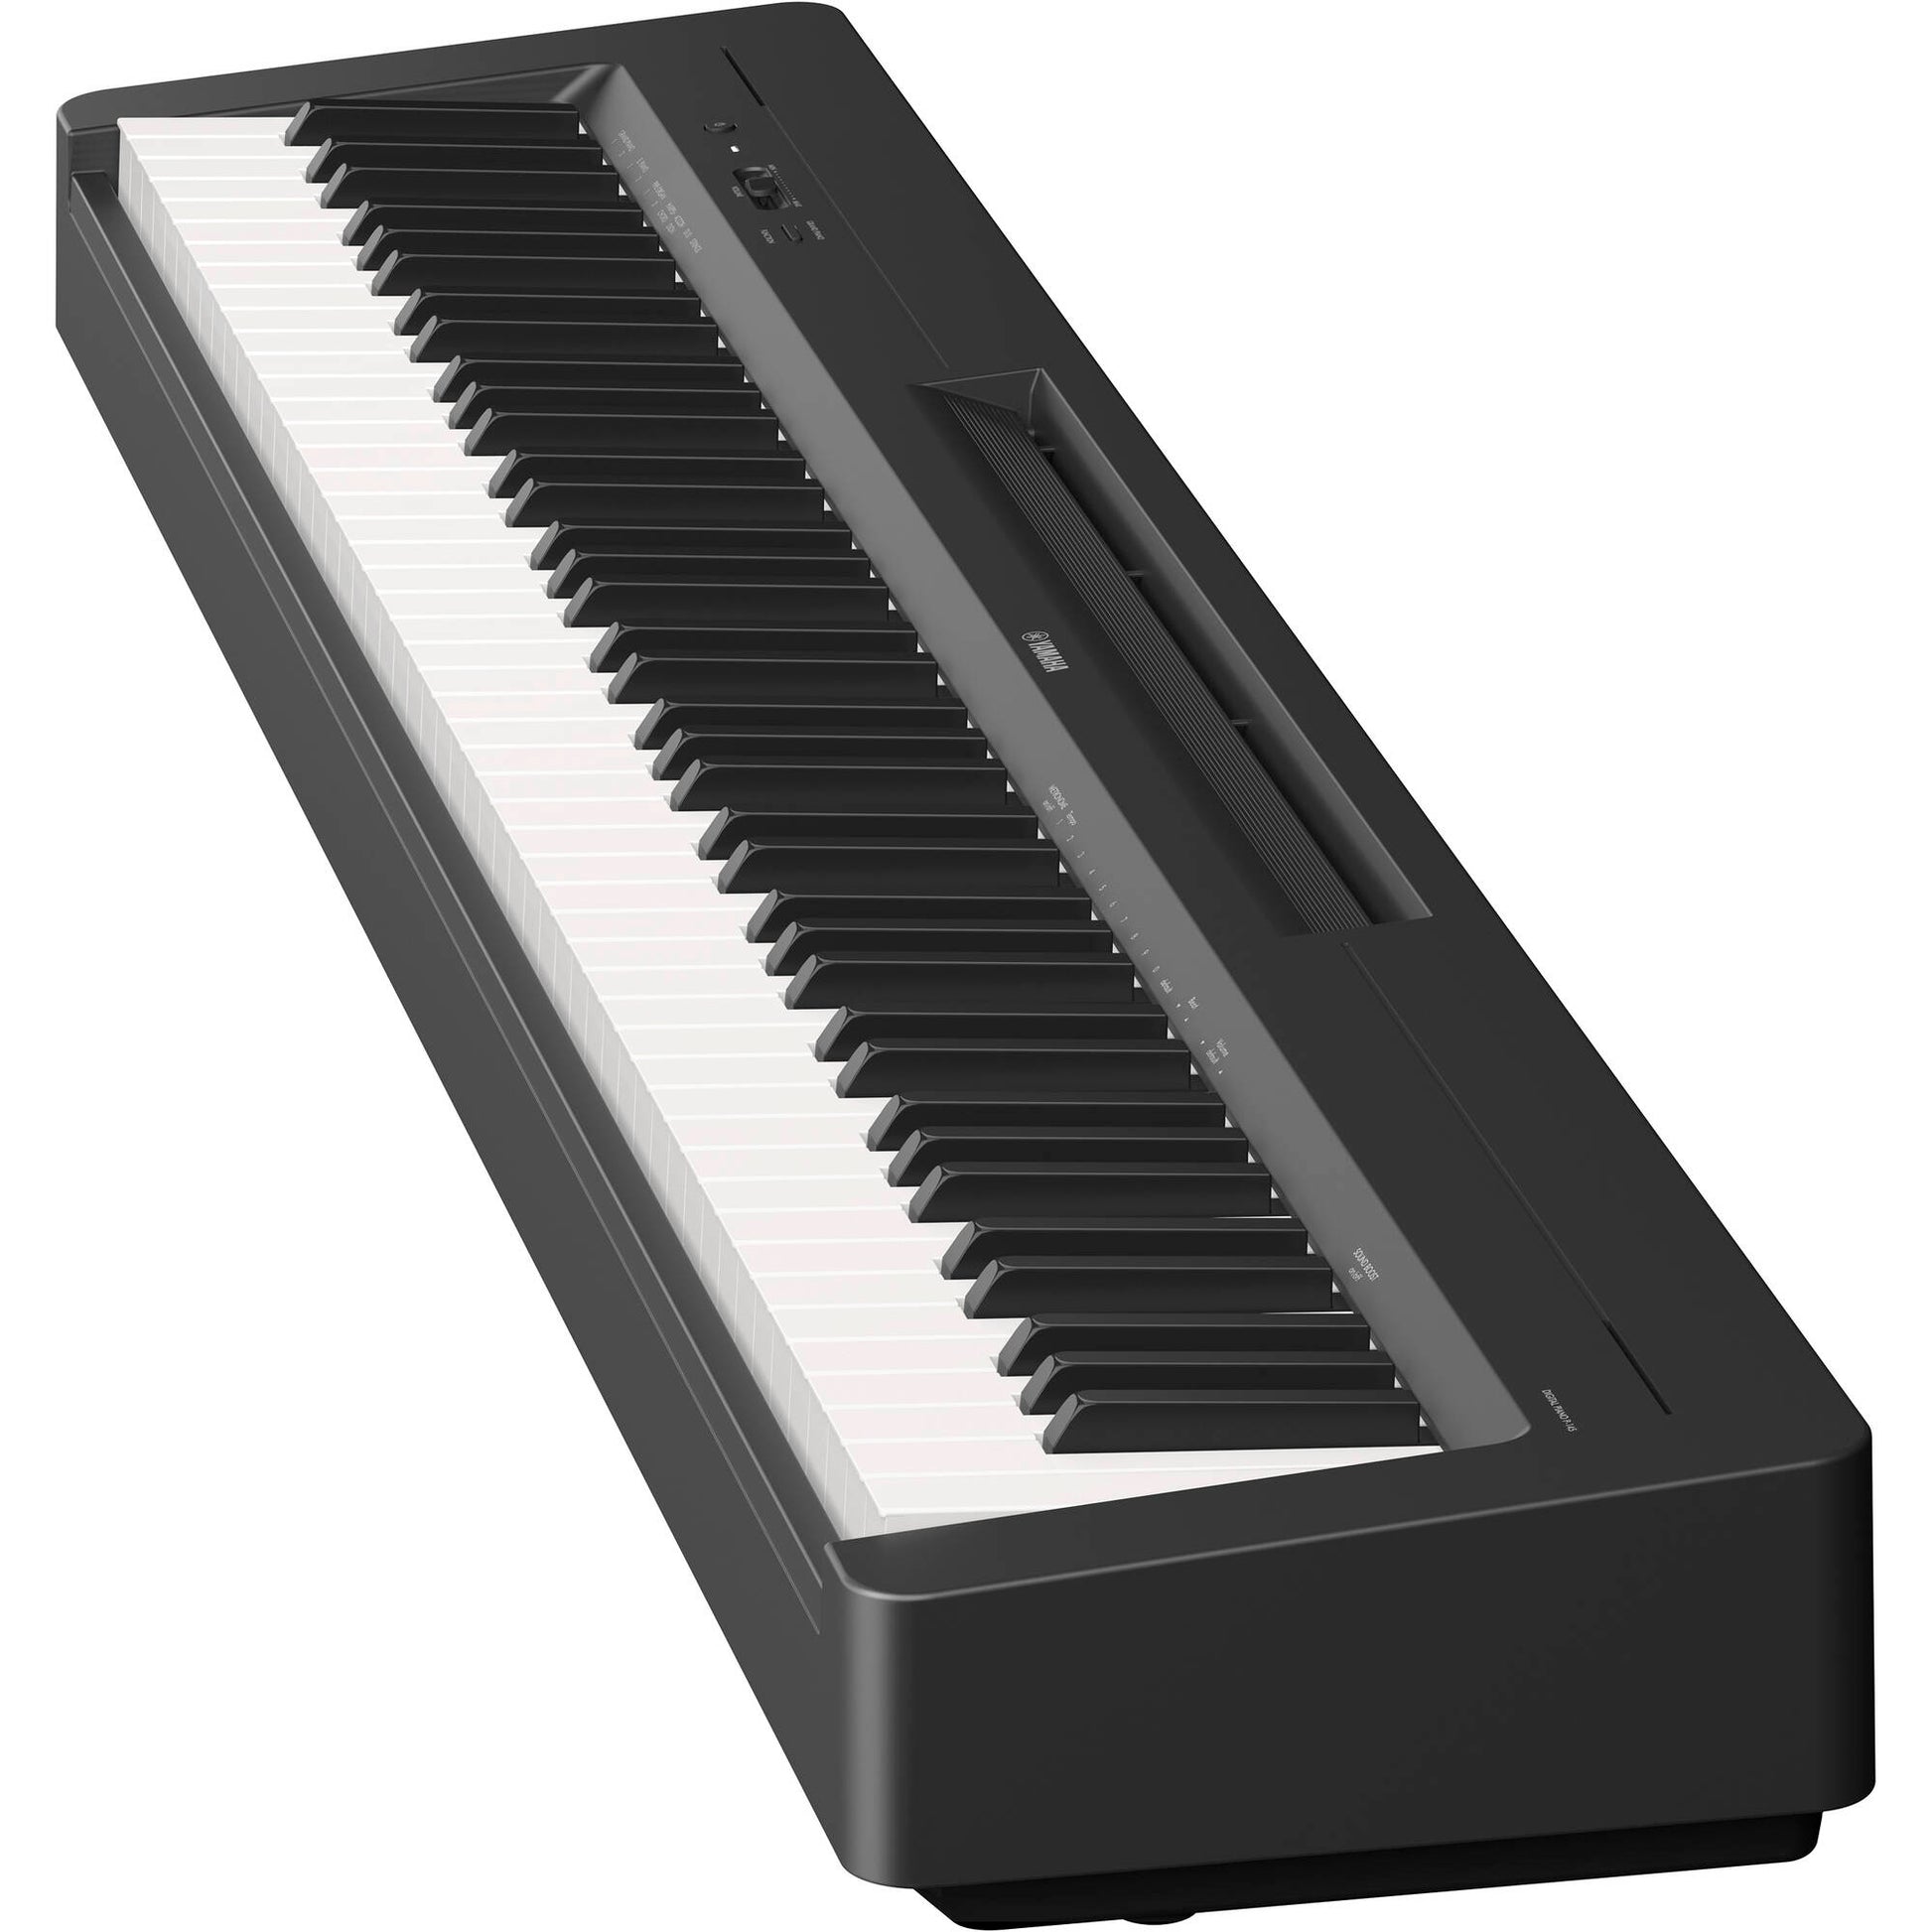 Yamaha P-145 Digital Portable Piano - Coach House Pianos